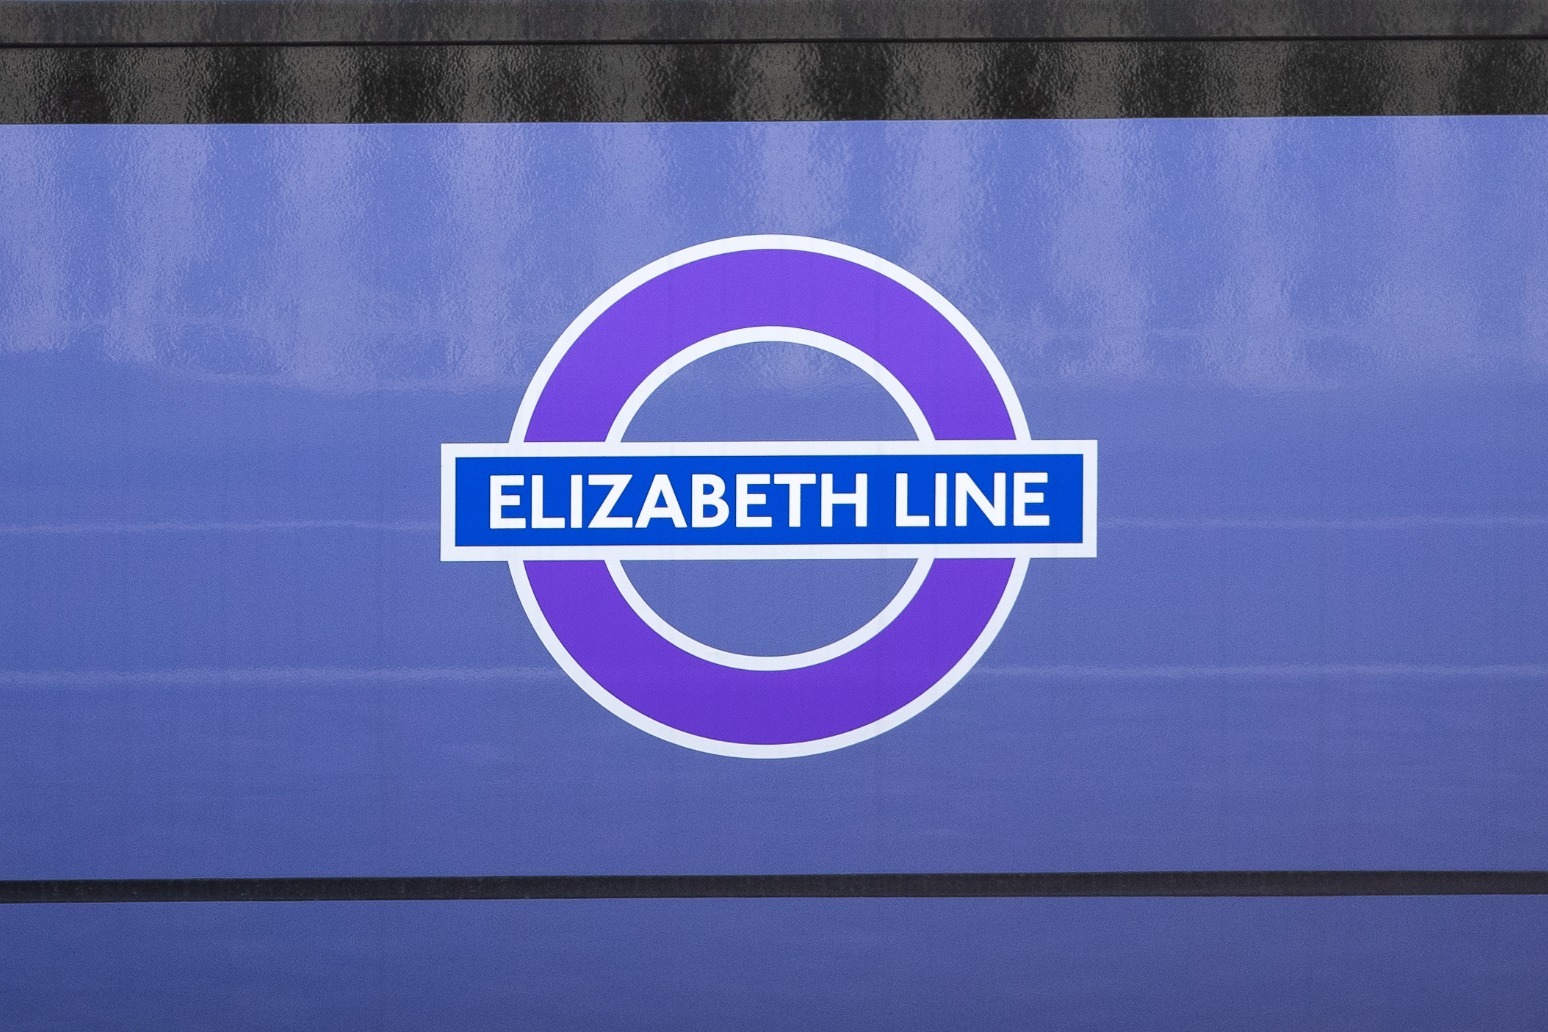 London’s Elizabeth line to open on May 24 